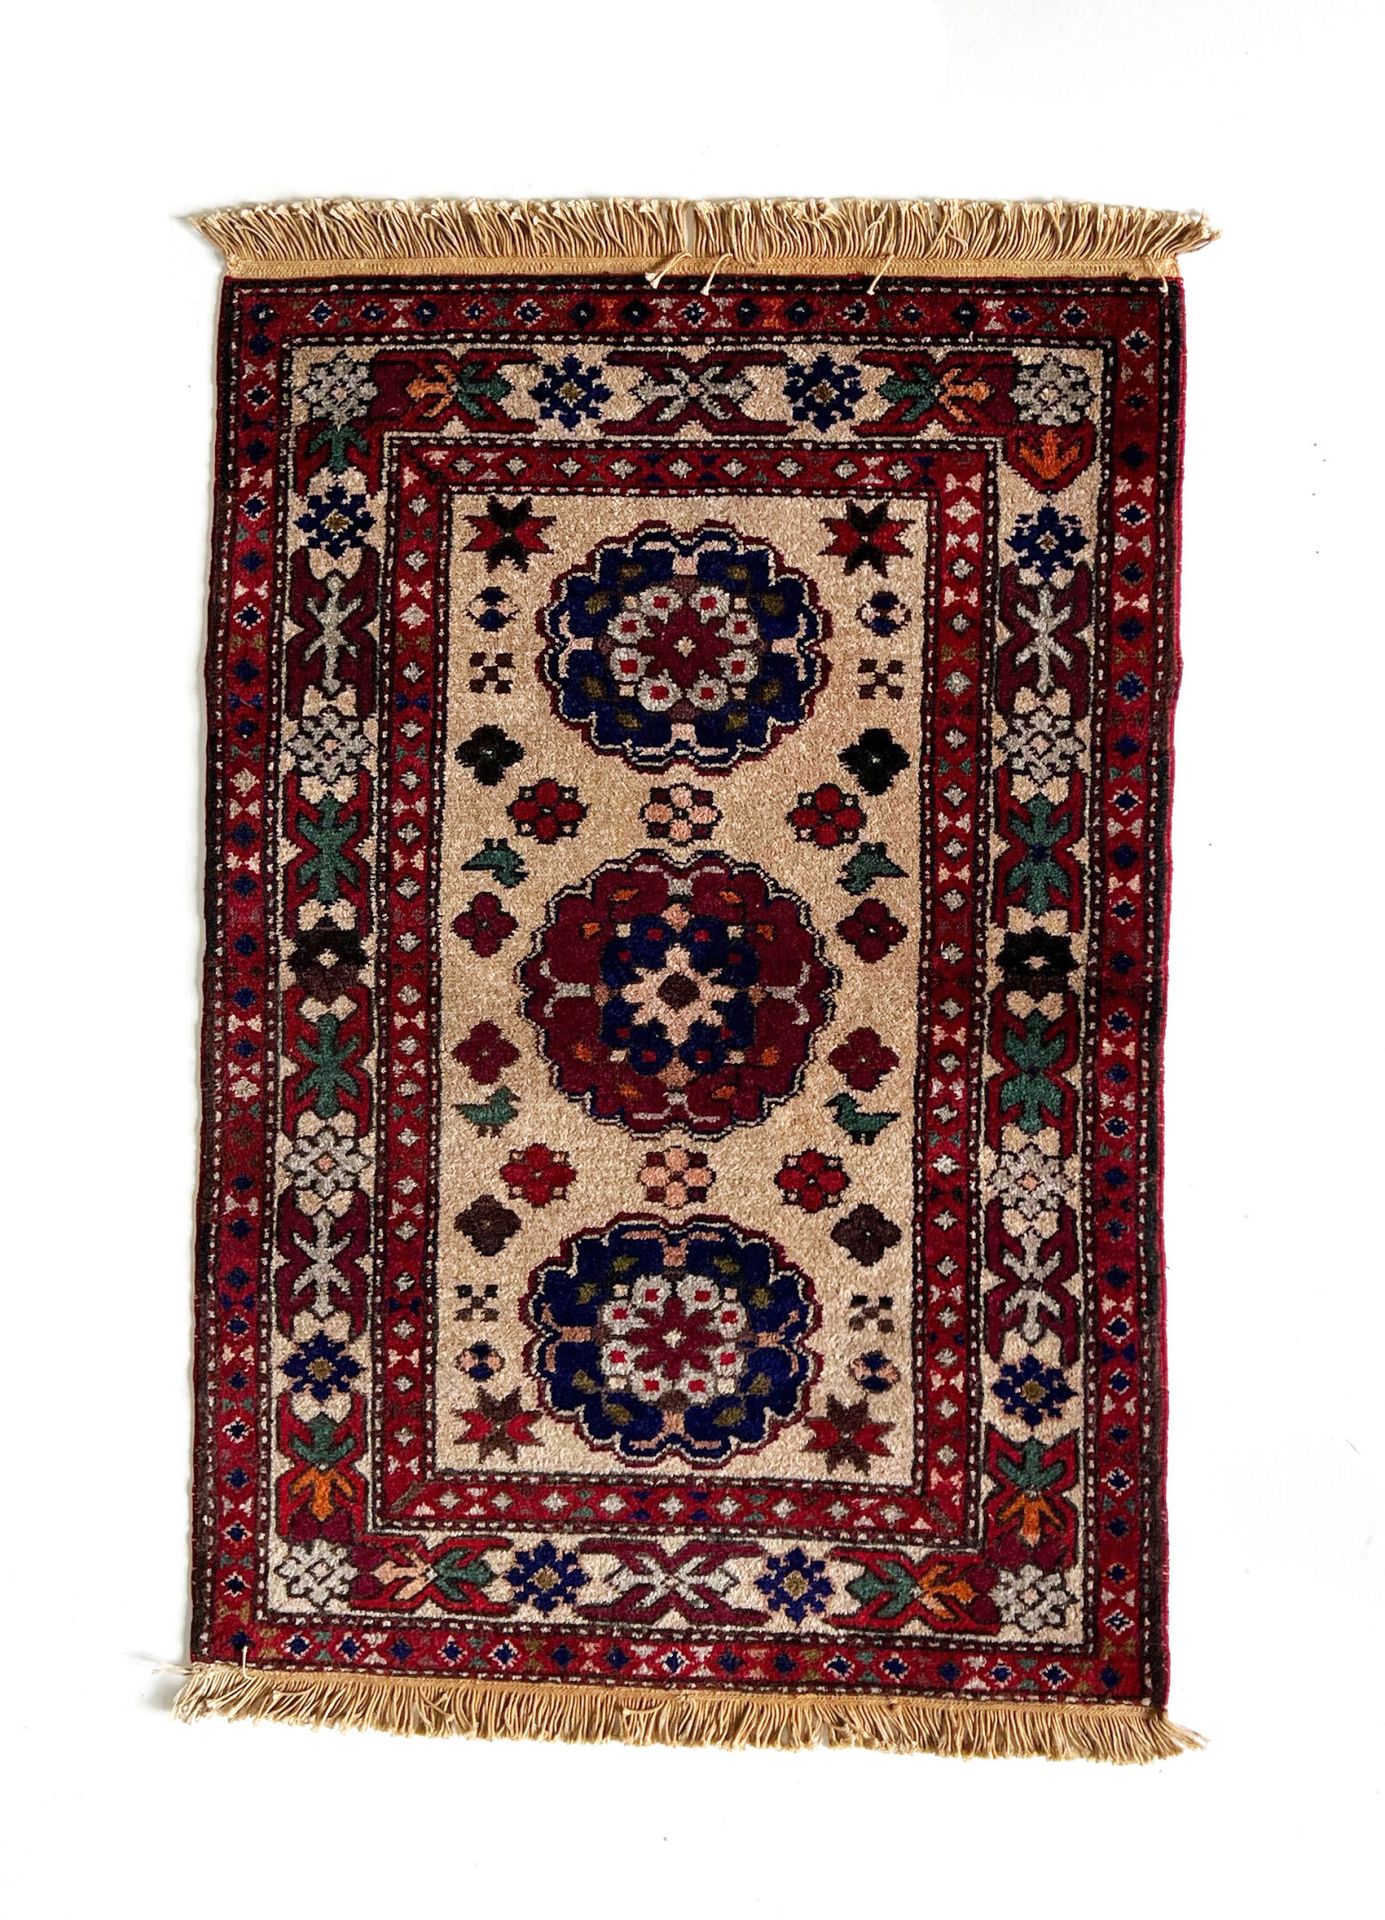 Null 东方的地毯

达吉斯坦地毯，20世纪，红色、奶油色和蓝色调，三层边框。饰有奖章和风格化的几何花纹图案。

状态良好 - 长1.00 x 宽0.65厘米